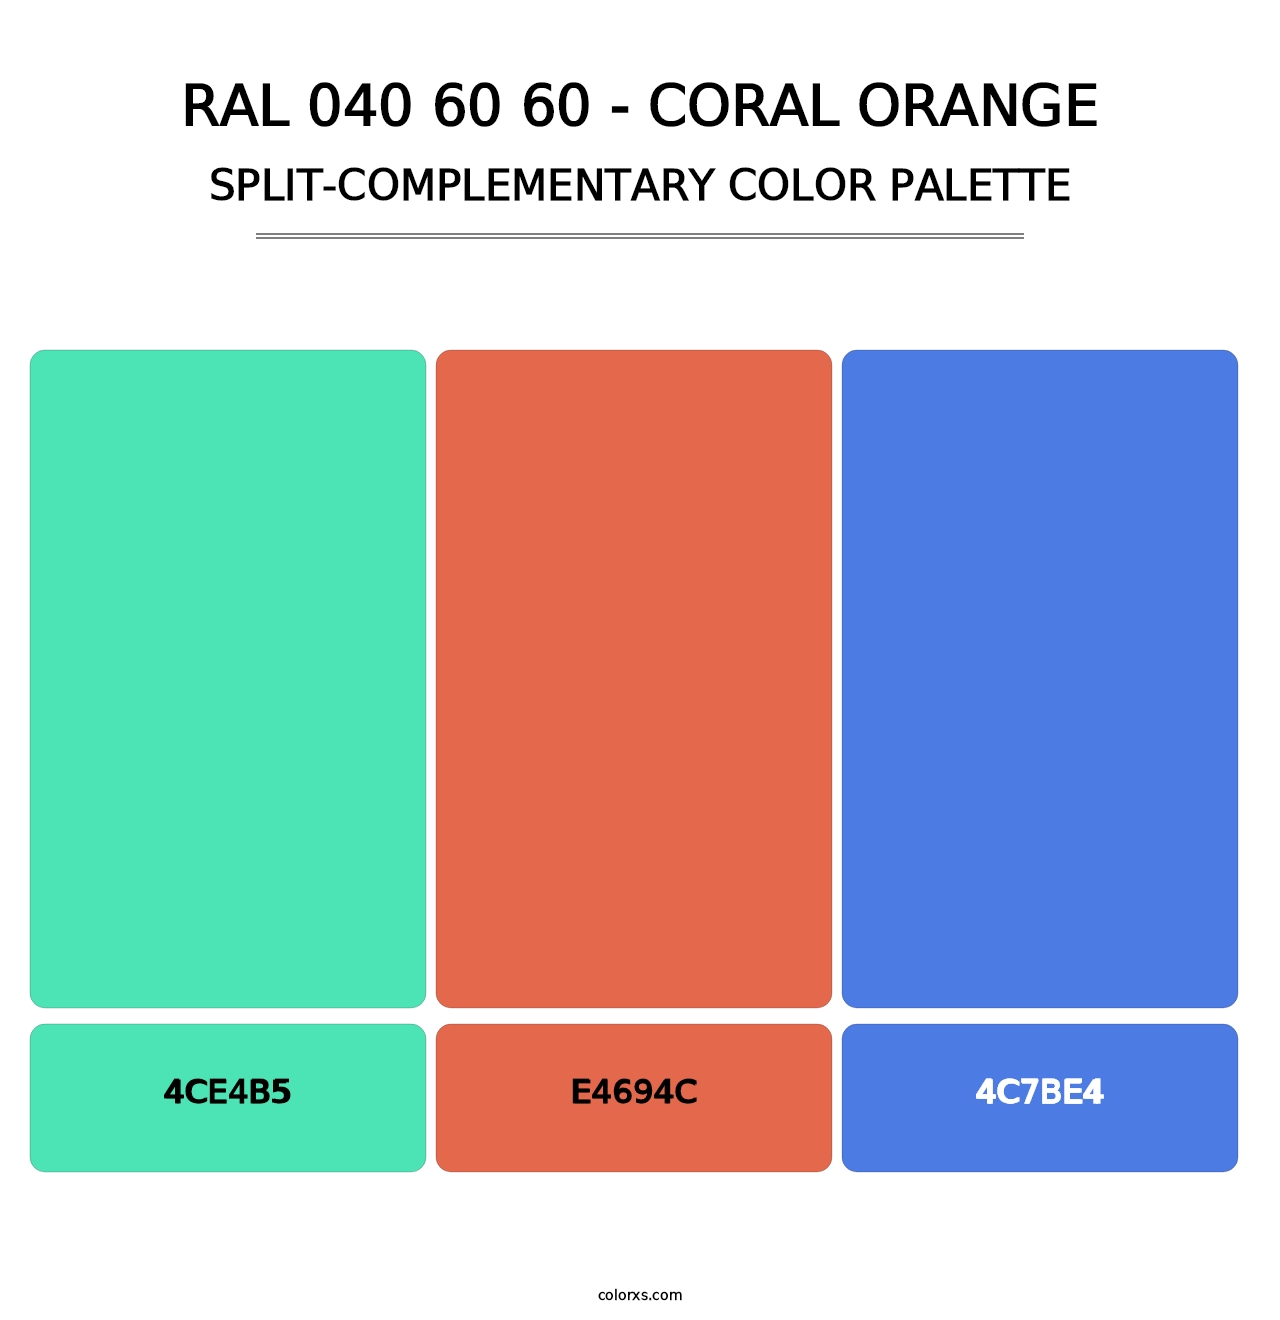 RAL 040 60 60 - Coral Orange - Split-Complementary Color Palette